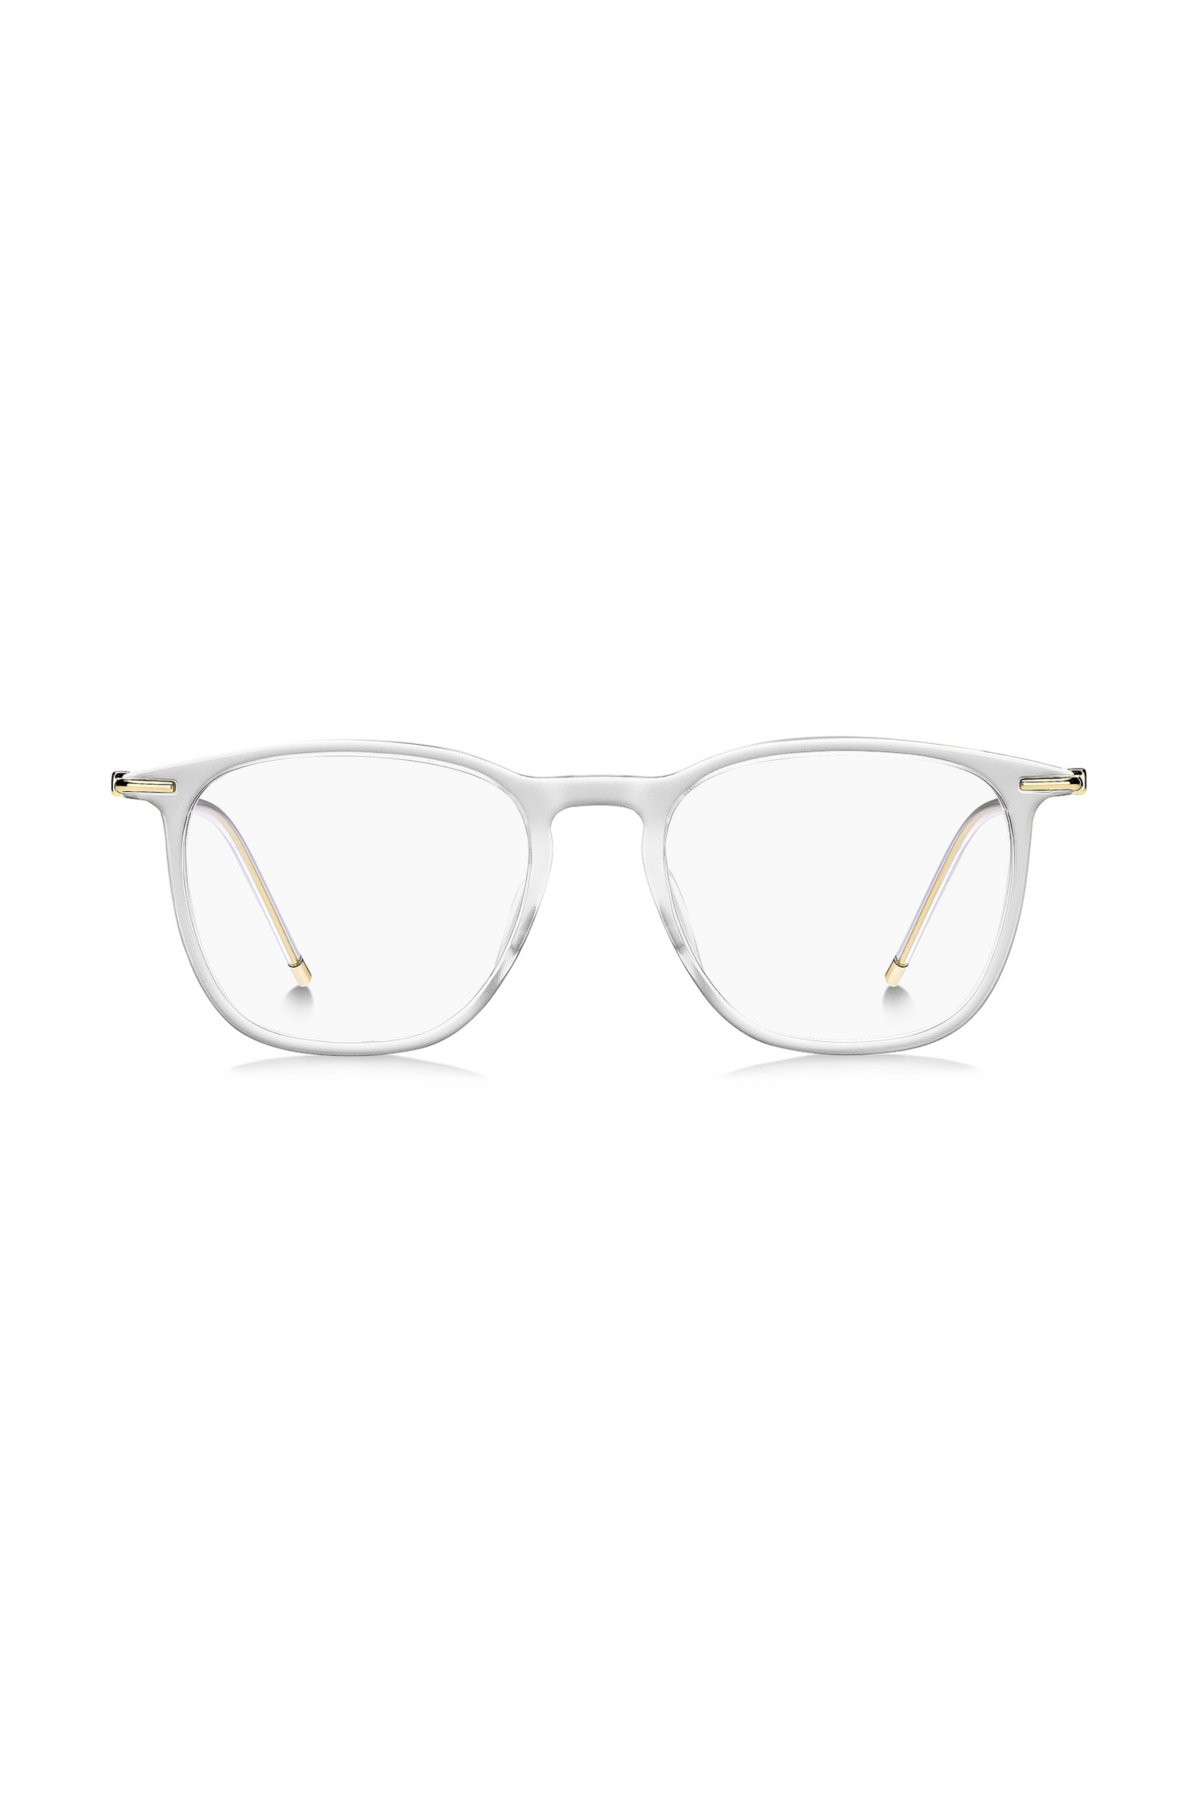 BOSS - Montura para gafas acetato transparente patillas doradas